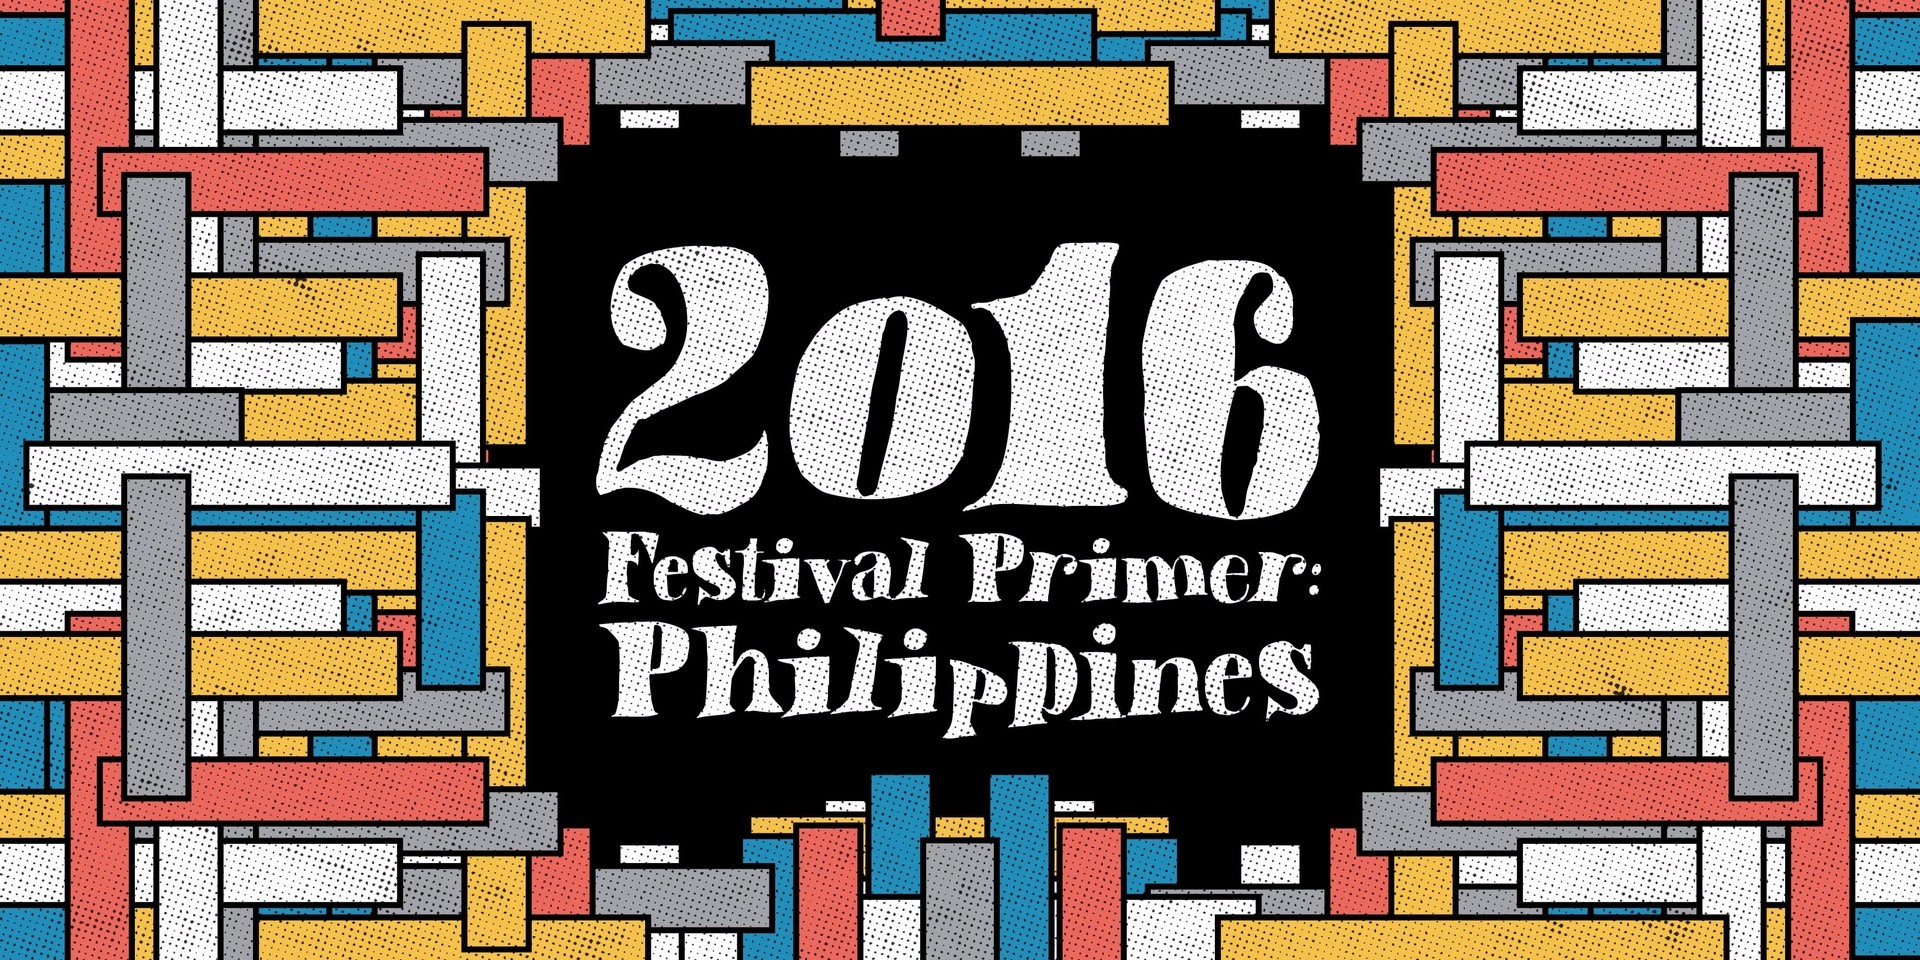 The 2016 Bandwagon Festival Primer: Philippines